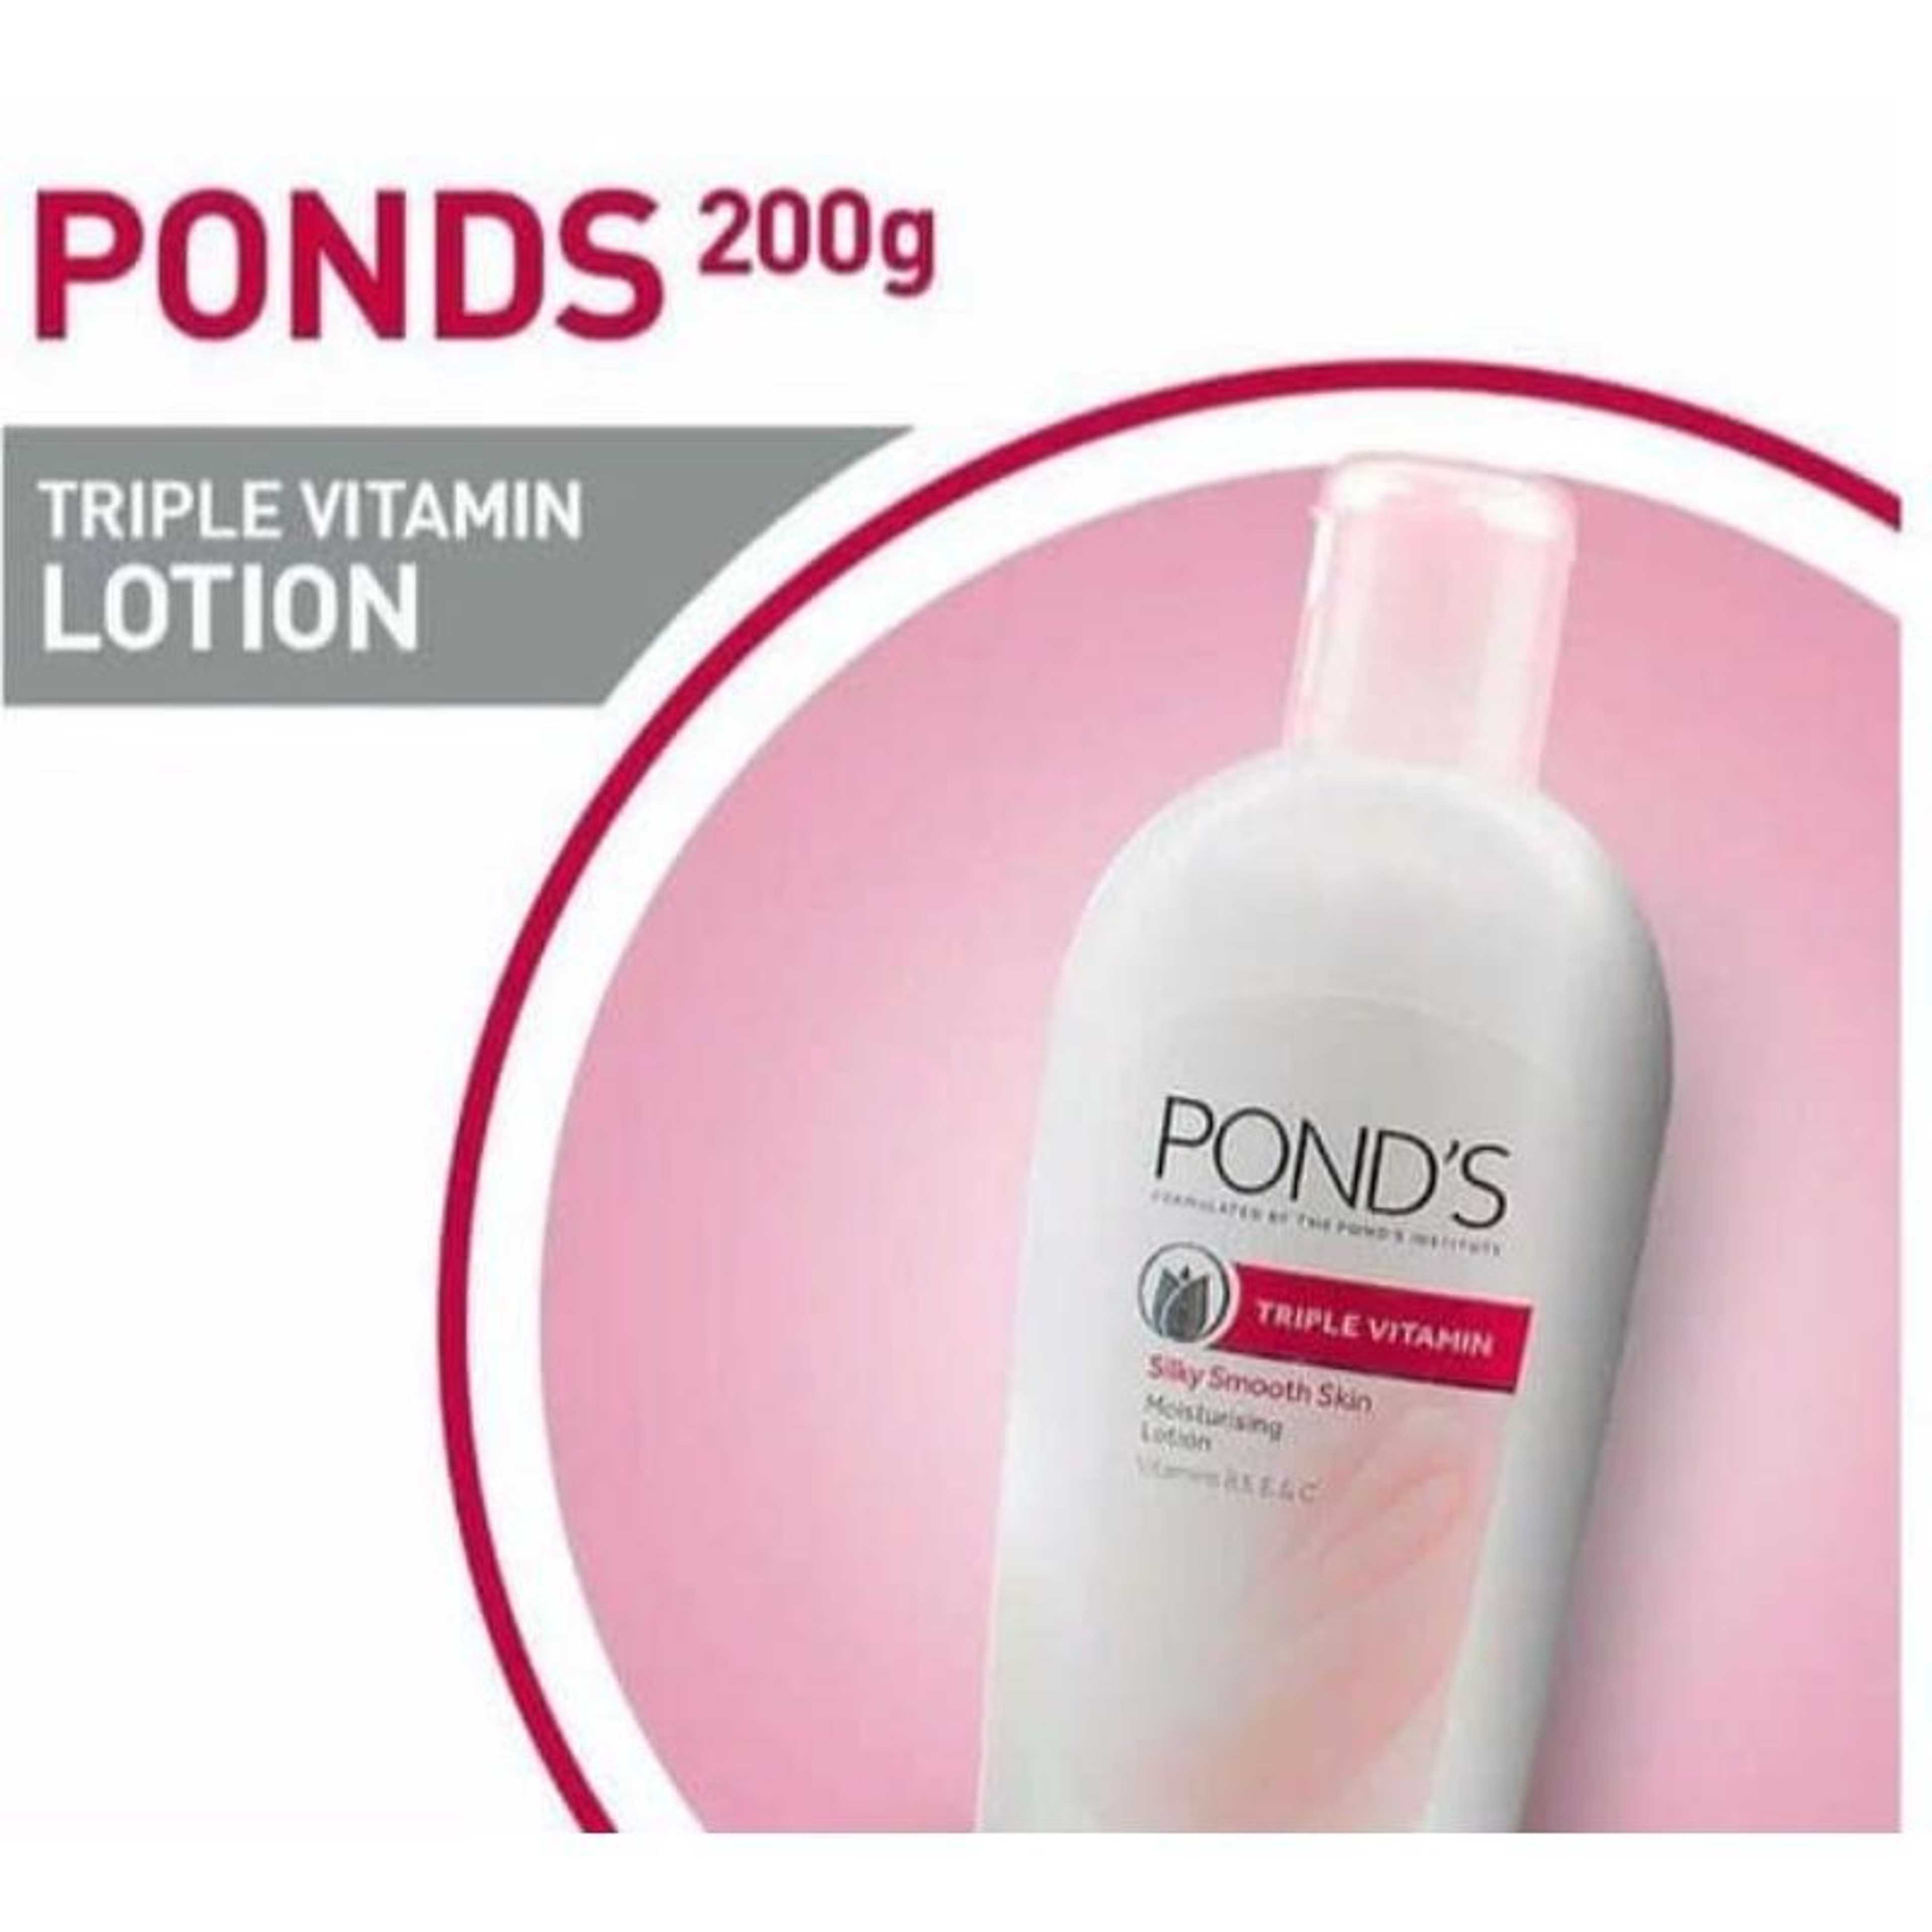 Pond's body lotion